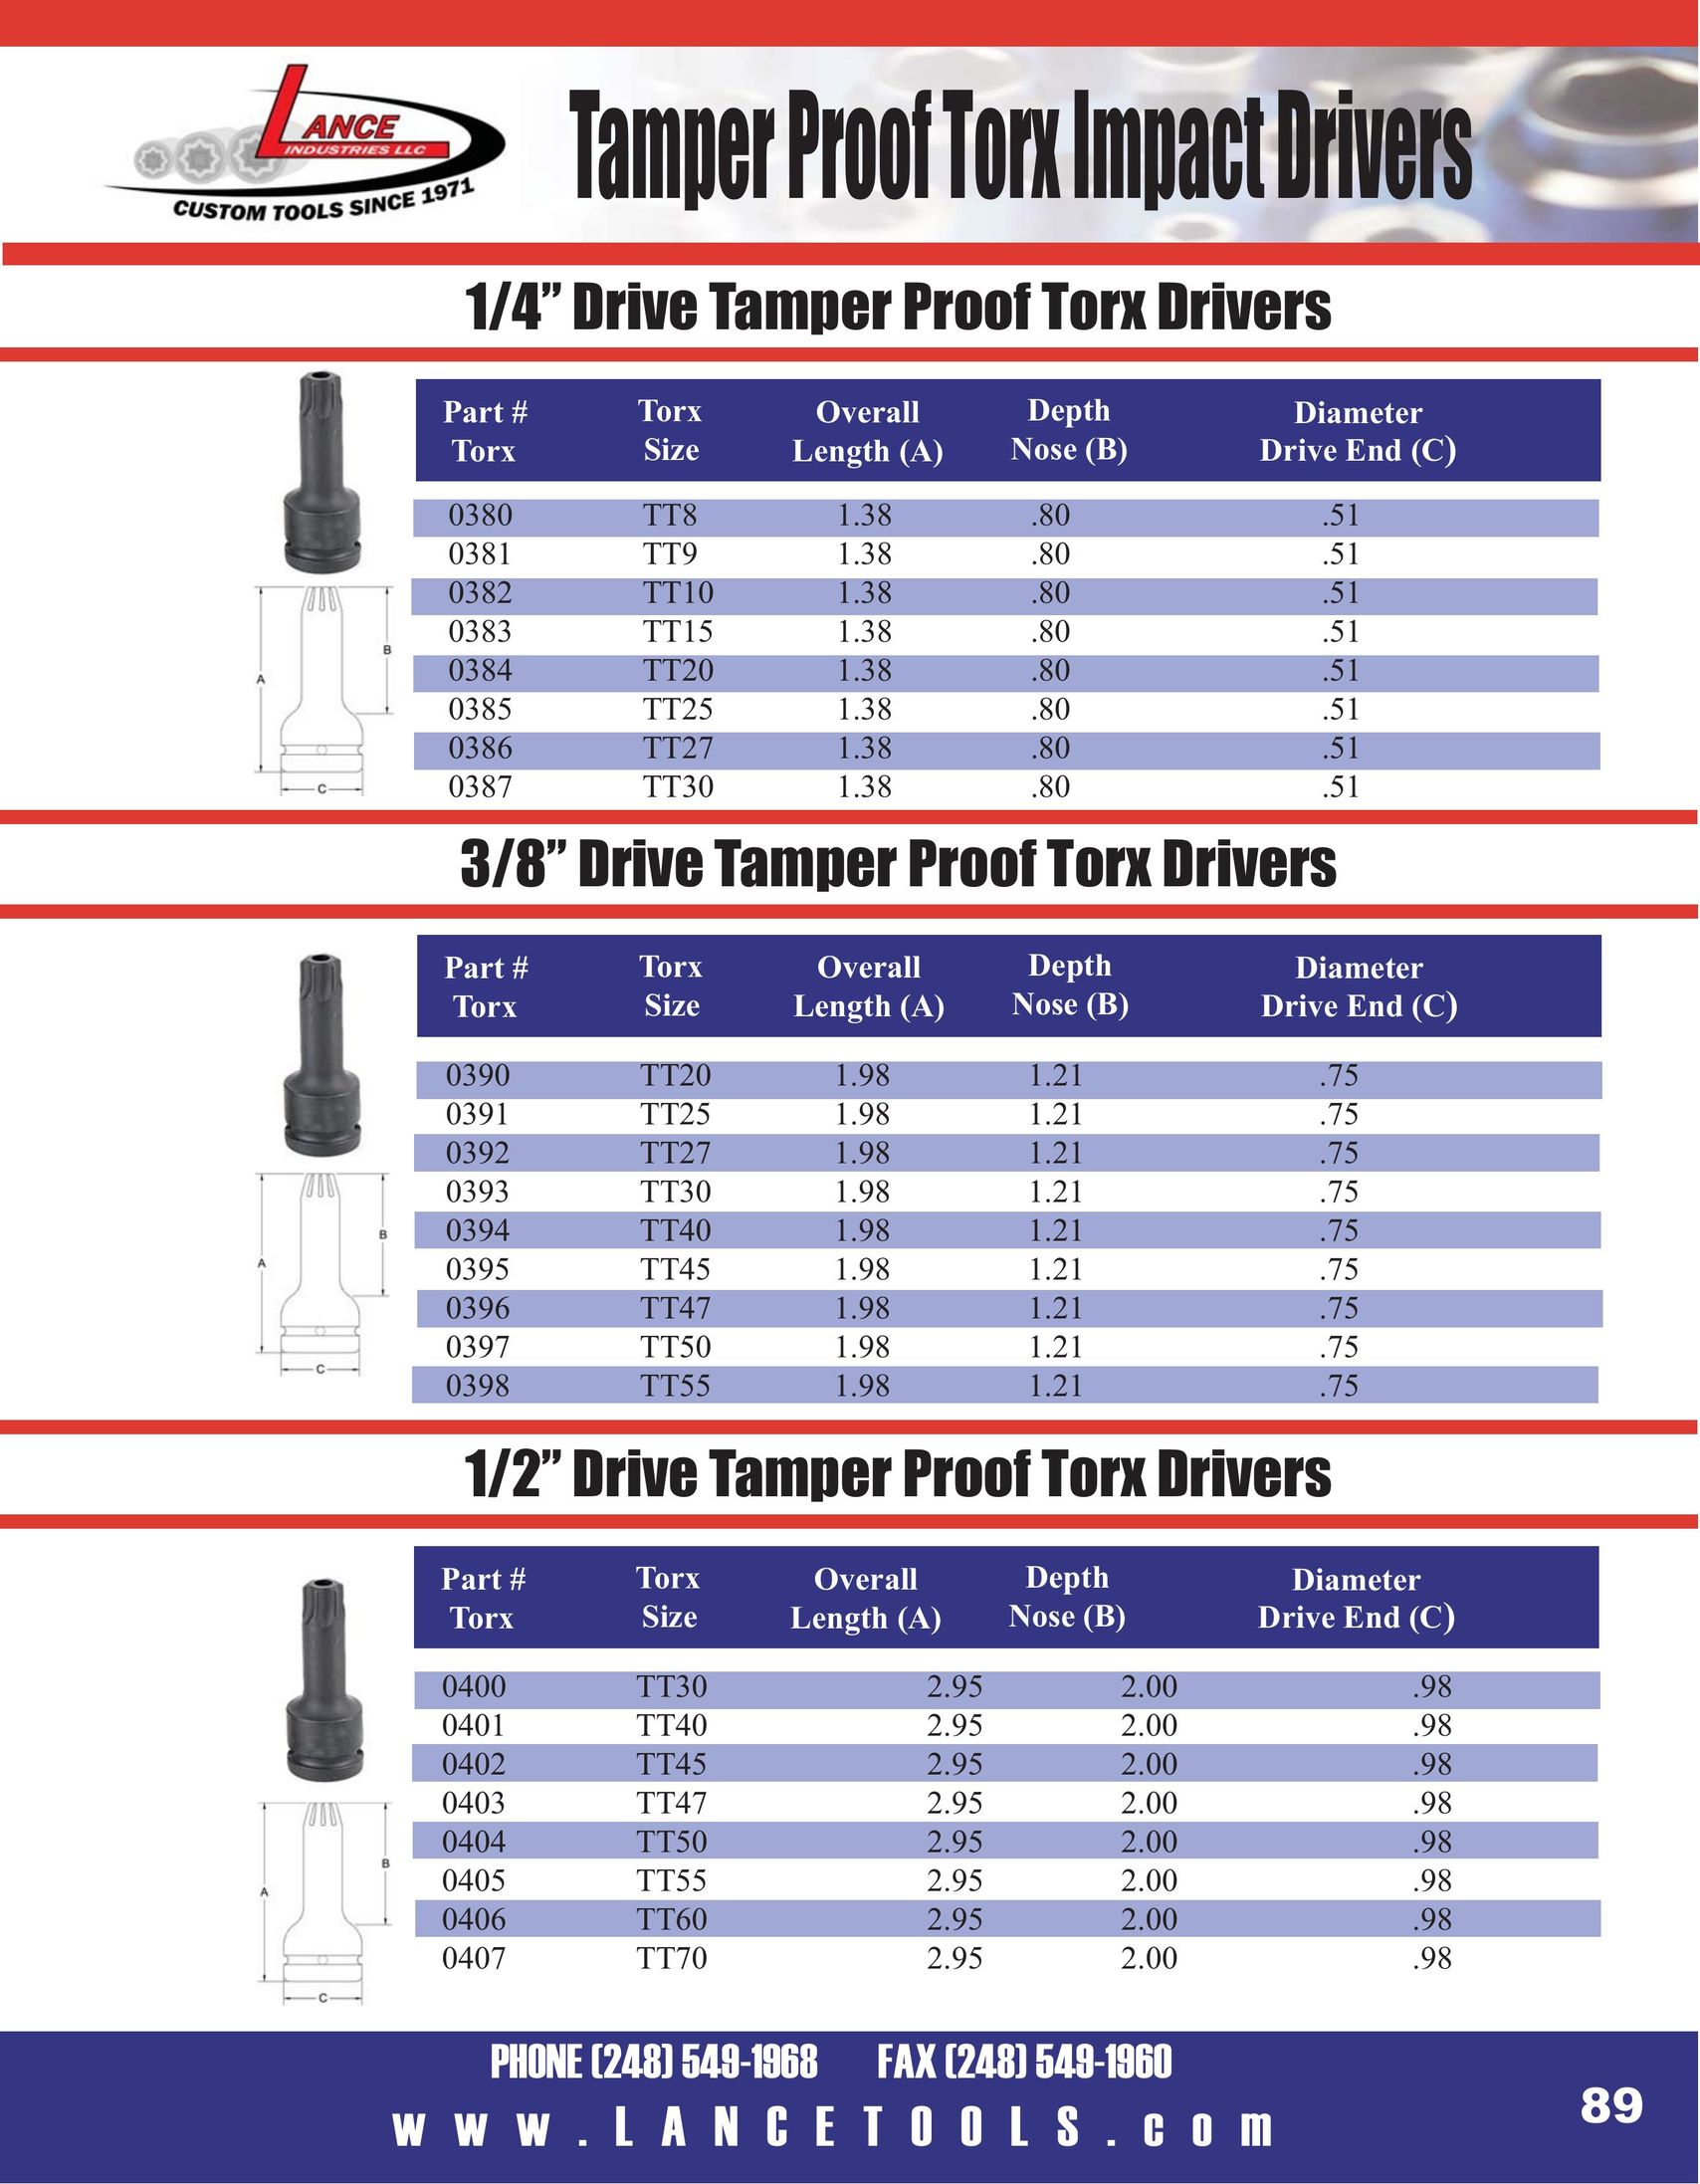 Lance Industries Torx Impact Drivers Impact Driver User Manual